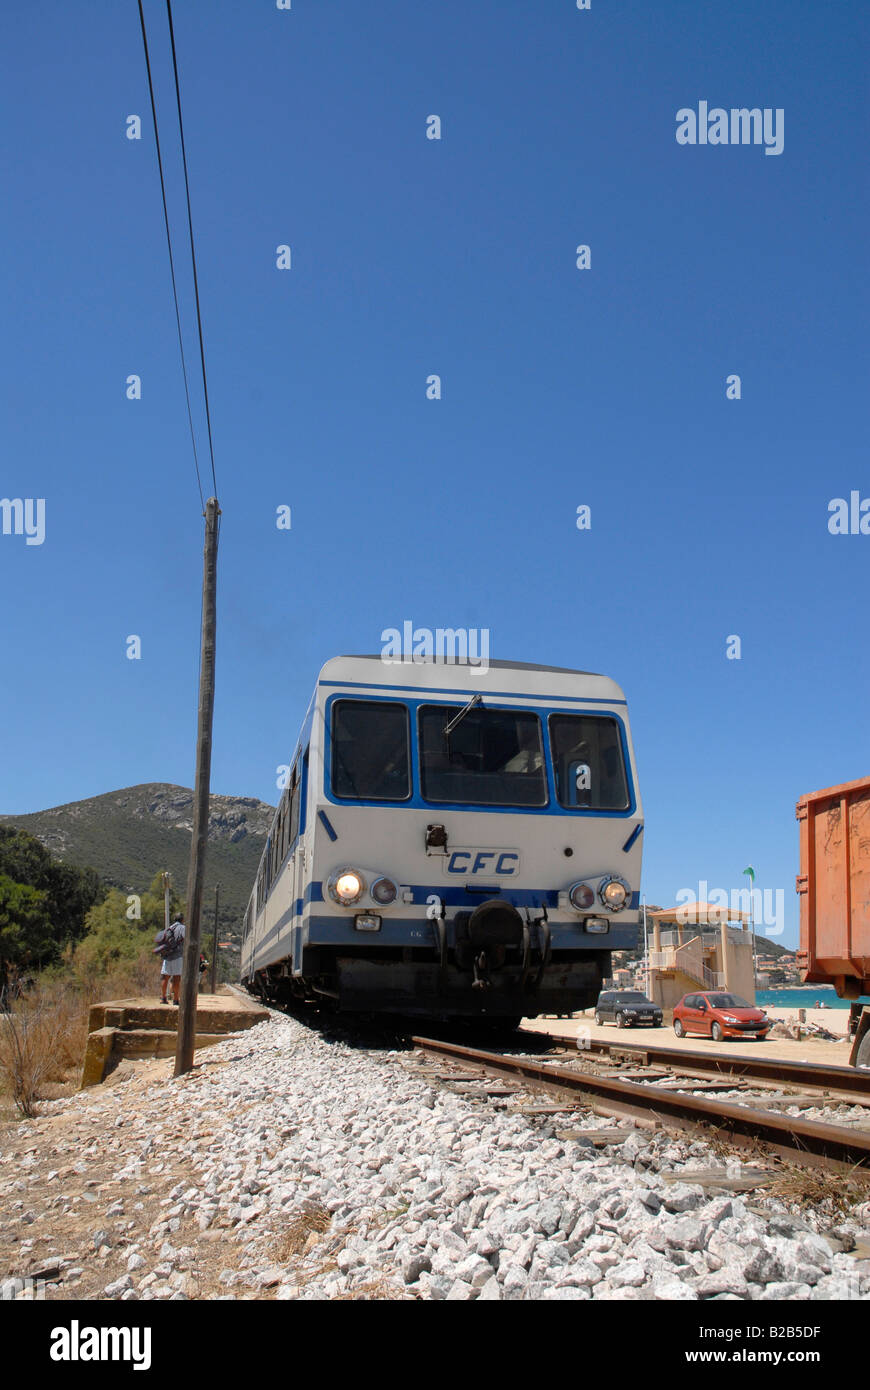 A train of Chemin de Fer de Corse, the railway system in the island of Corsica, as it passes through Algajola Stock Photo